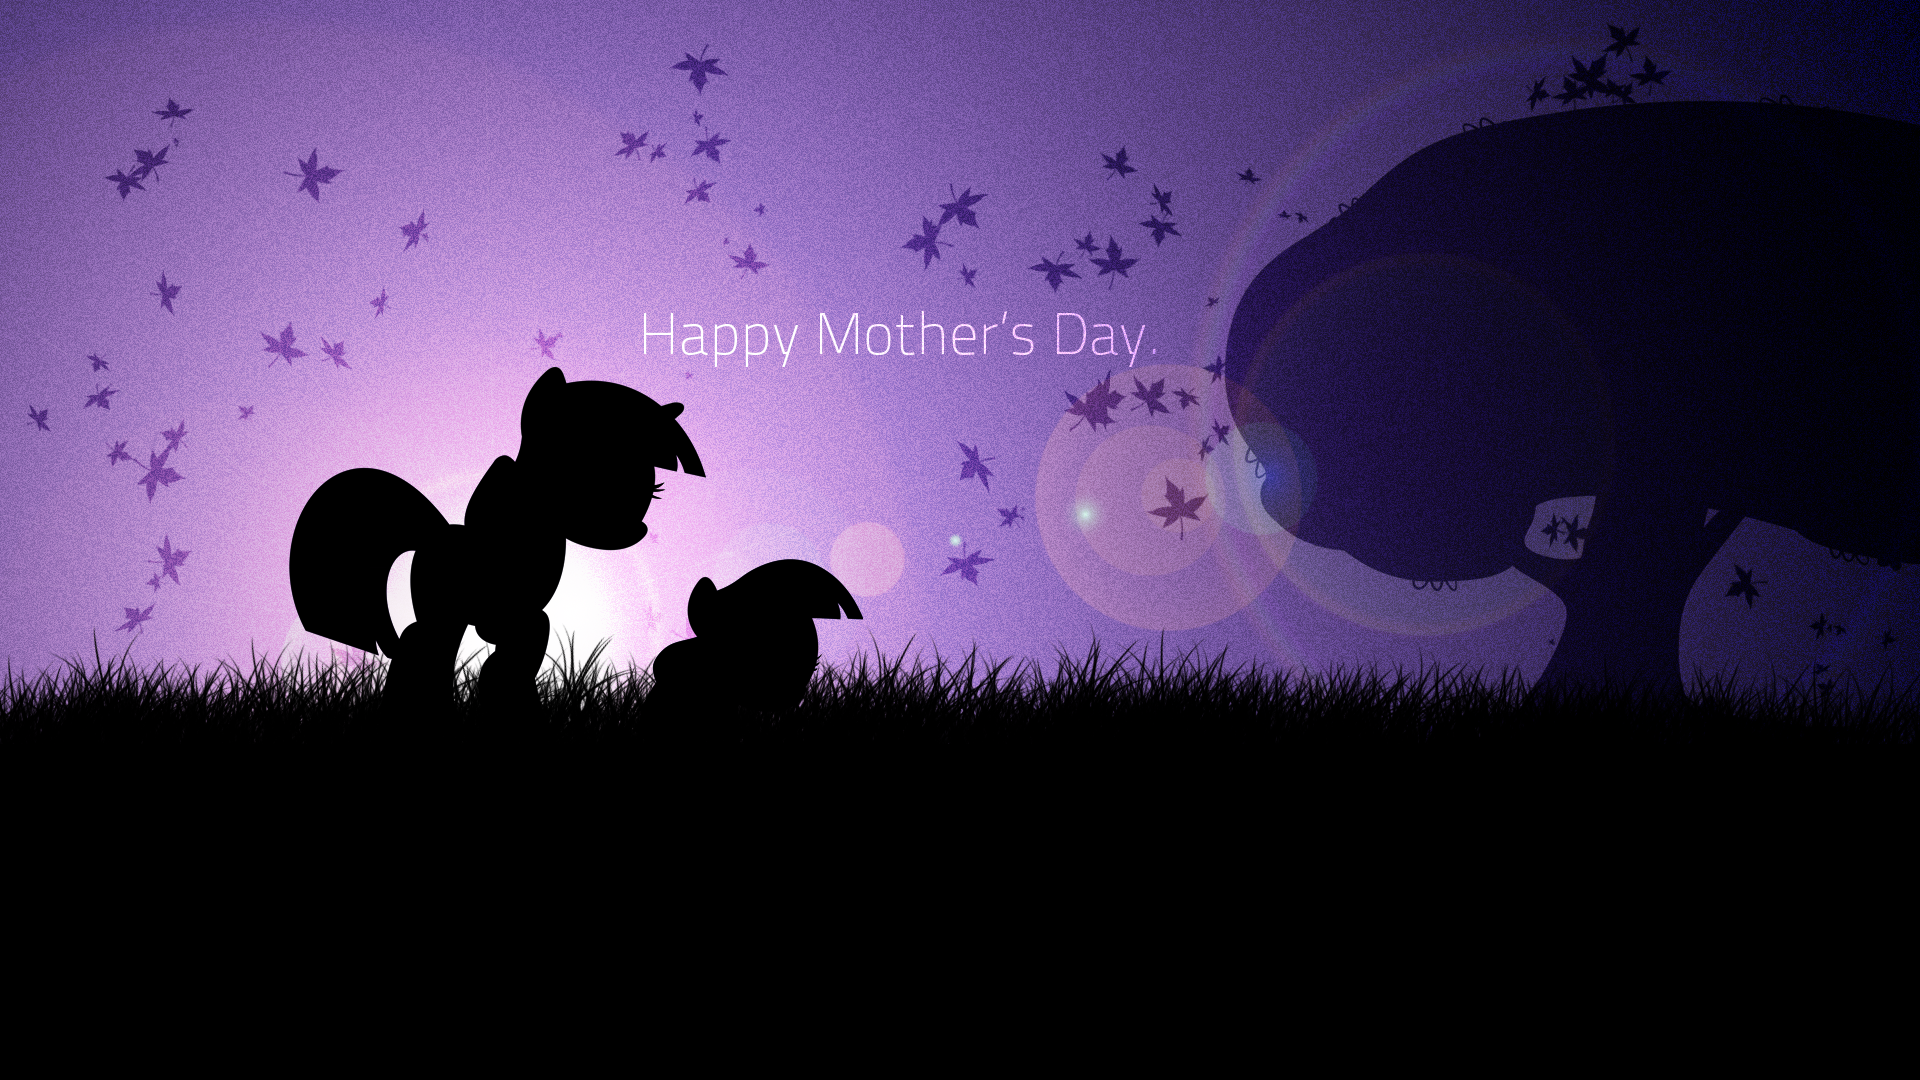 Free download Mothers Day Desktop Background Wallpaper High